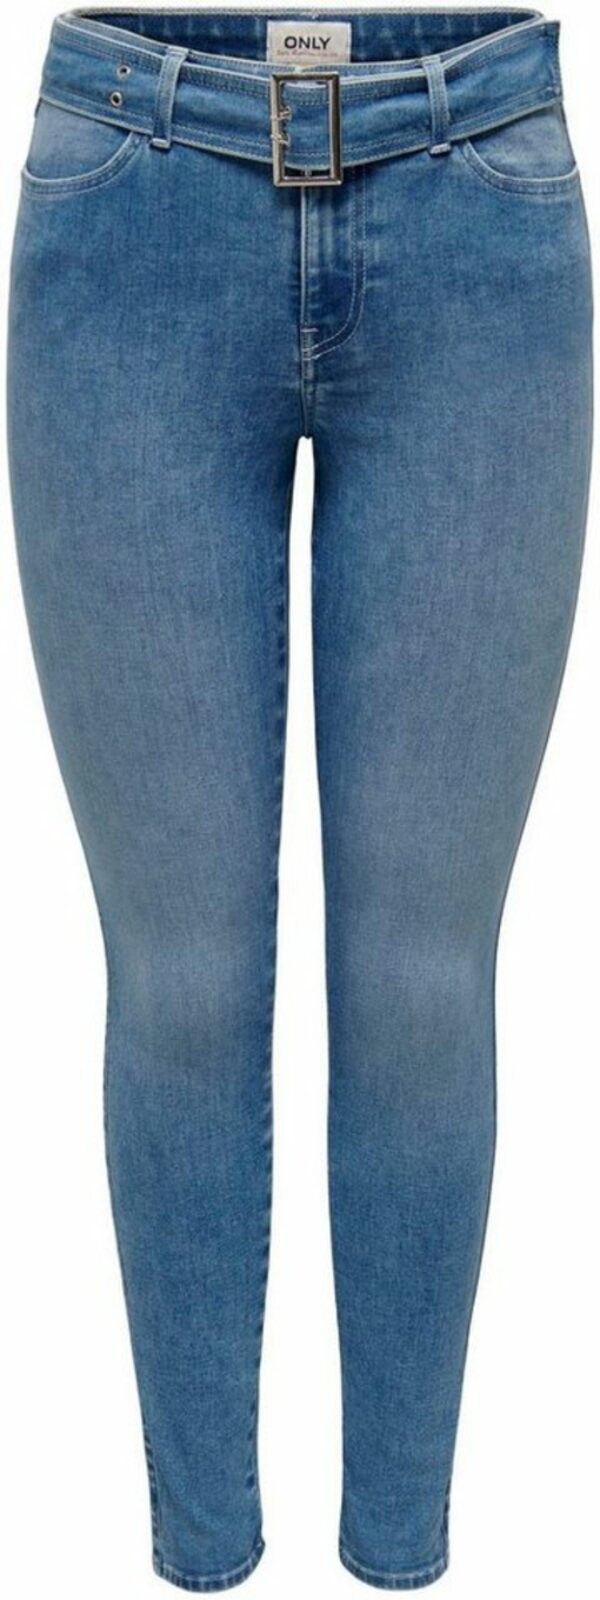 Bild 1 von ONLY Skinny-fit-Jeans ONLWAUW MID WAIST SKINNY BELT DNM GUA, Blau